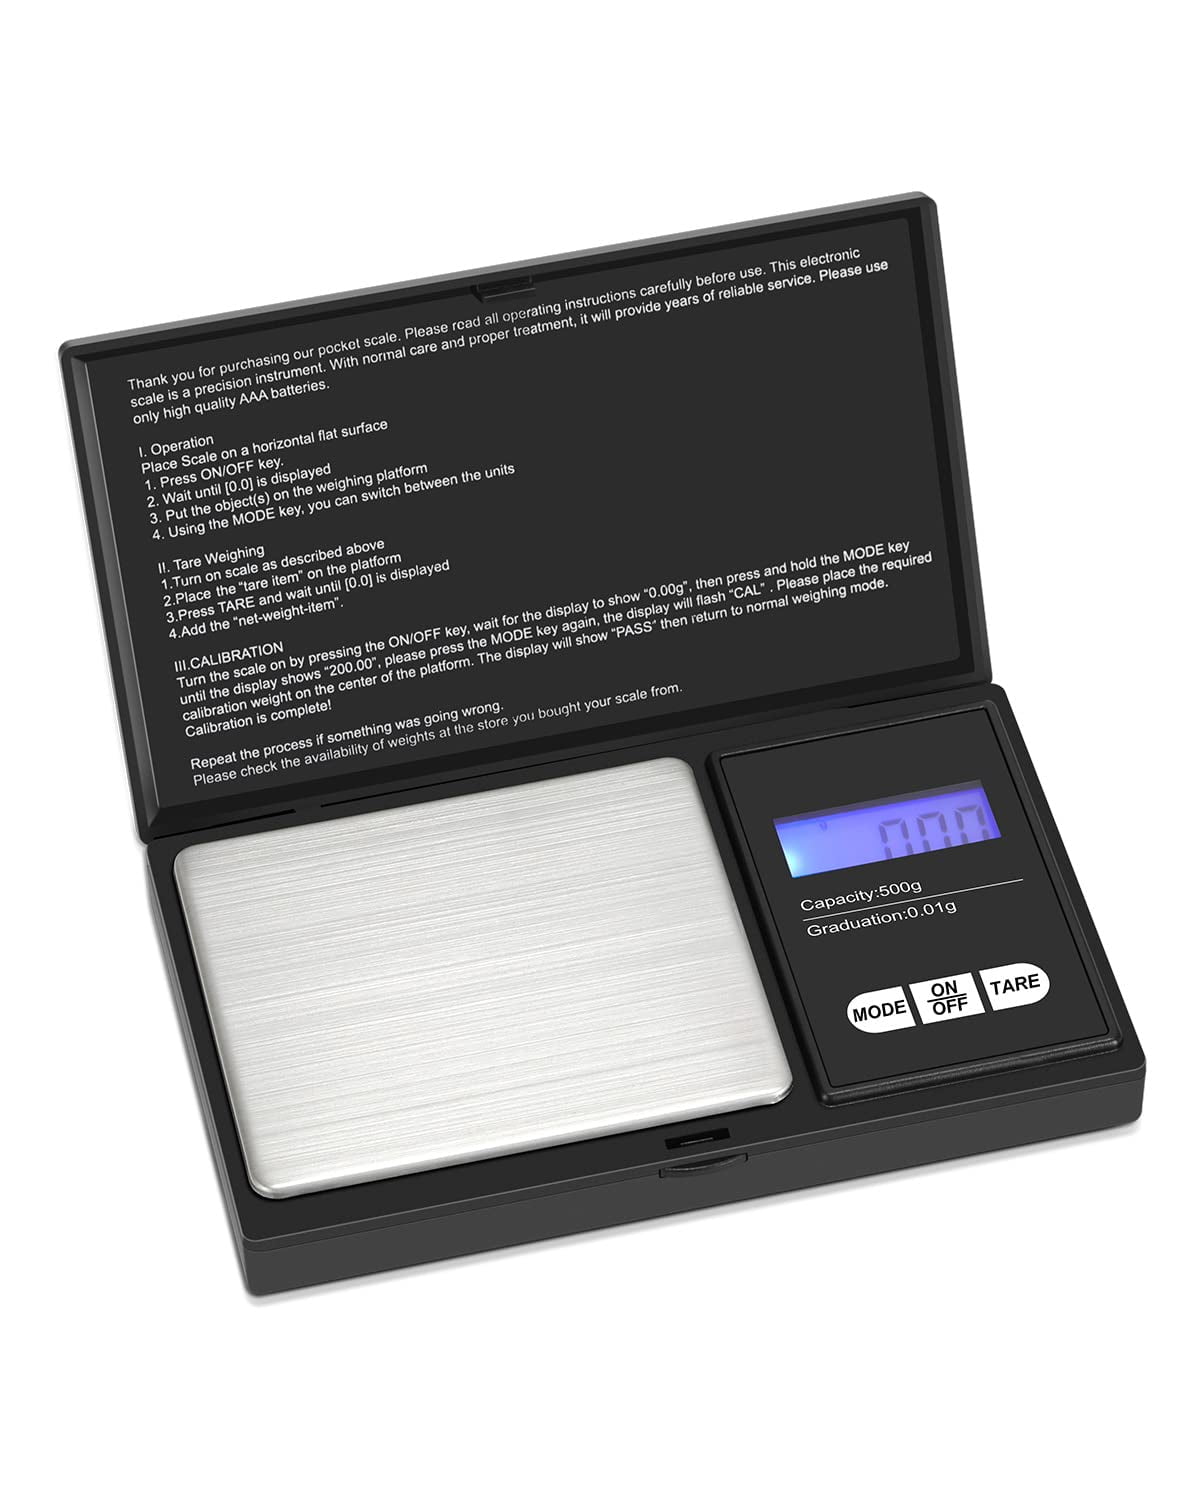 Digital Scale, Portable Mini Pocket Scale Digital Electronic Food